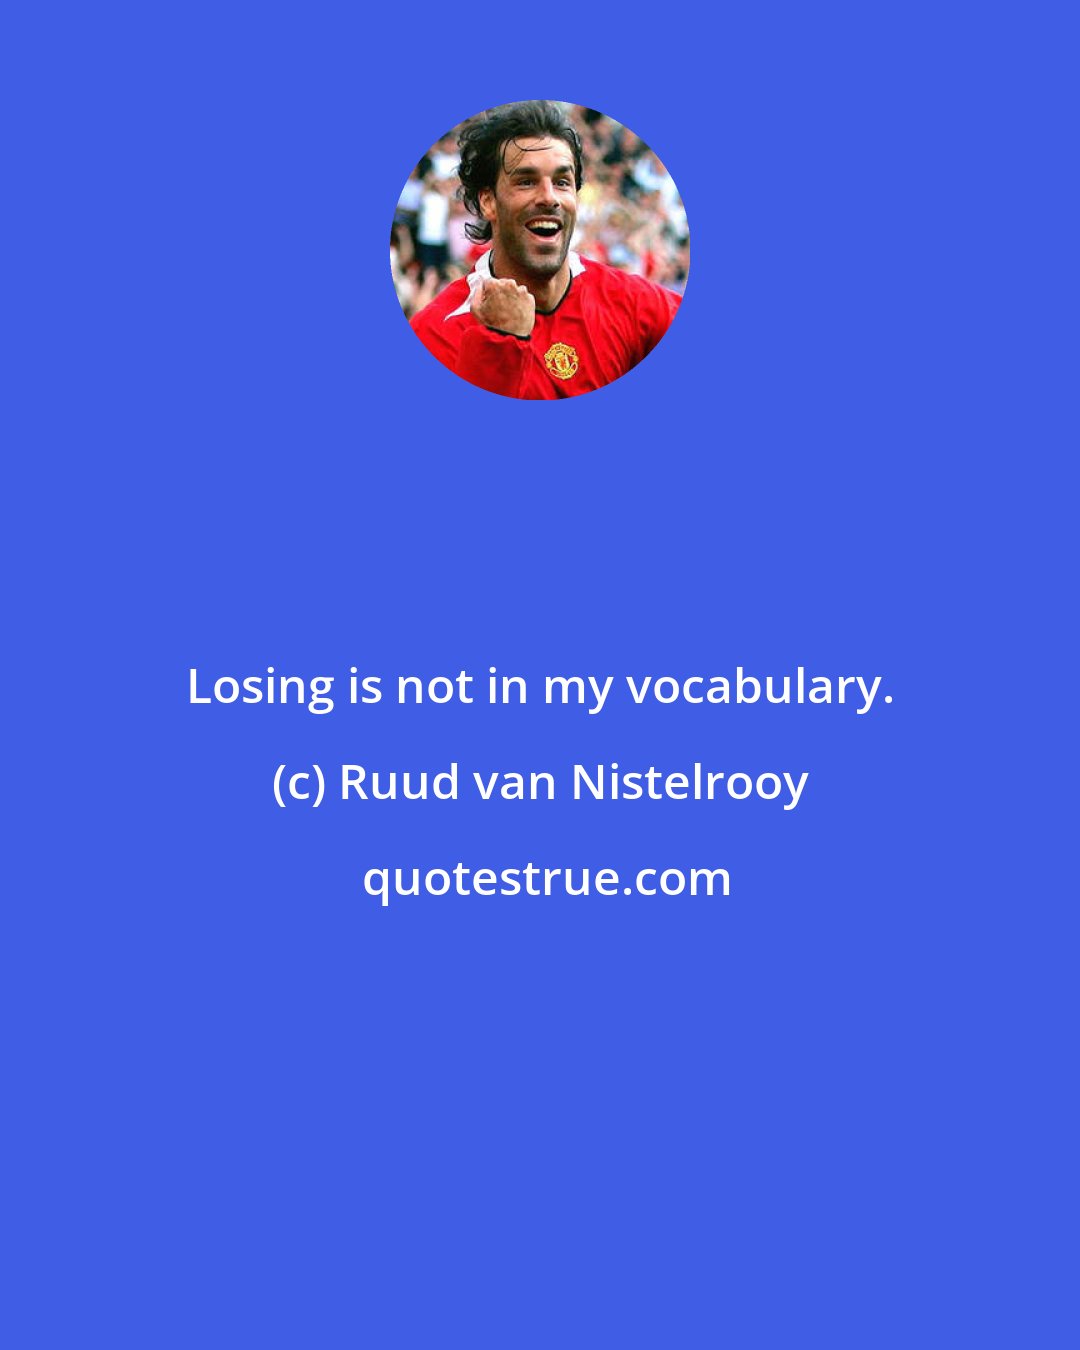 Ruud van Nistelrooy: Losing is not in my vocabulary.